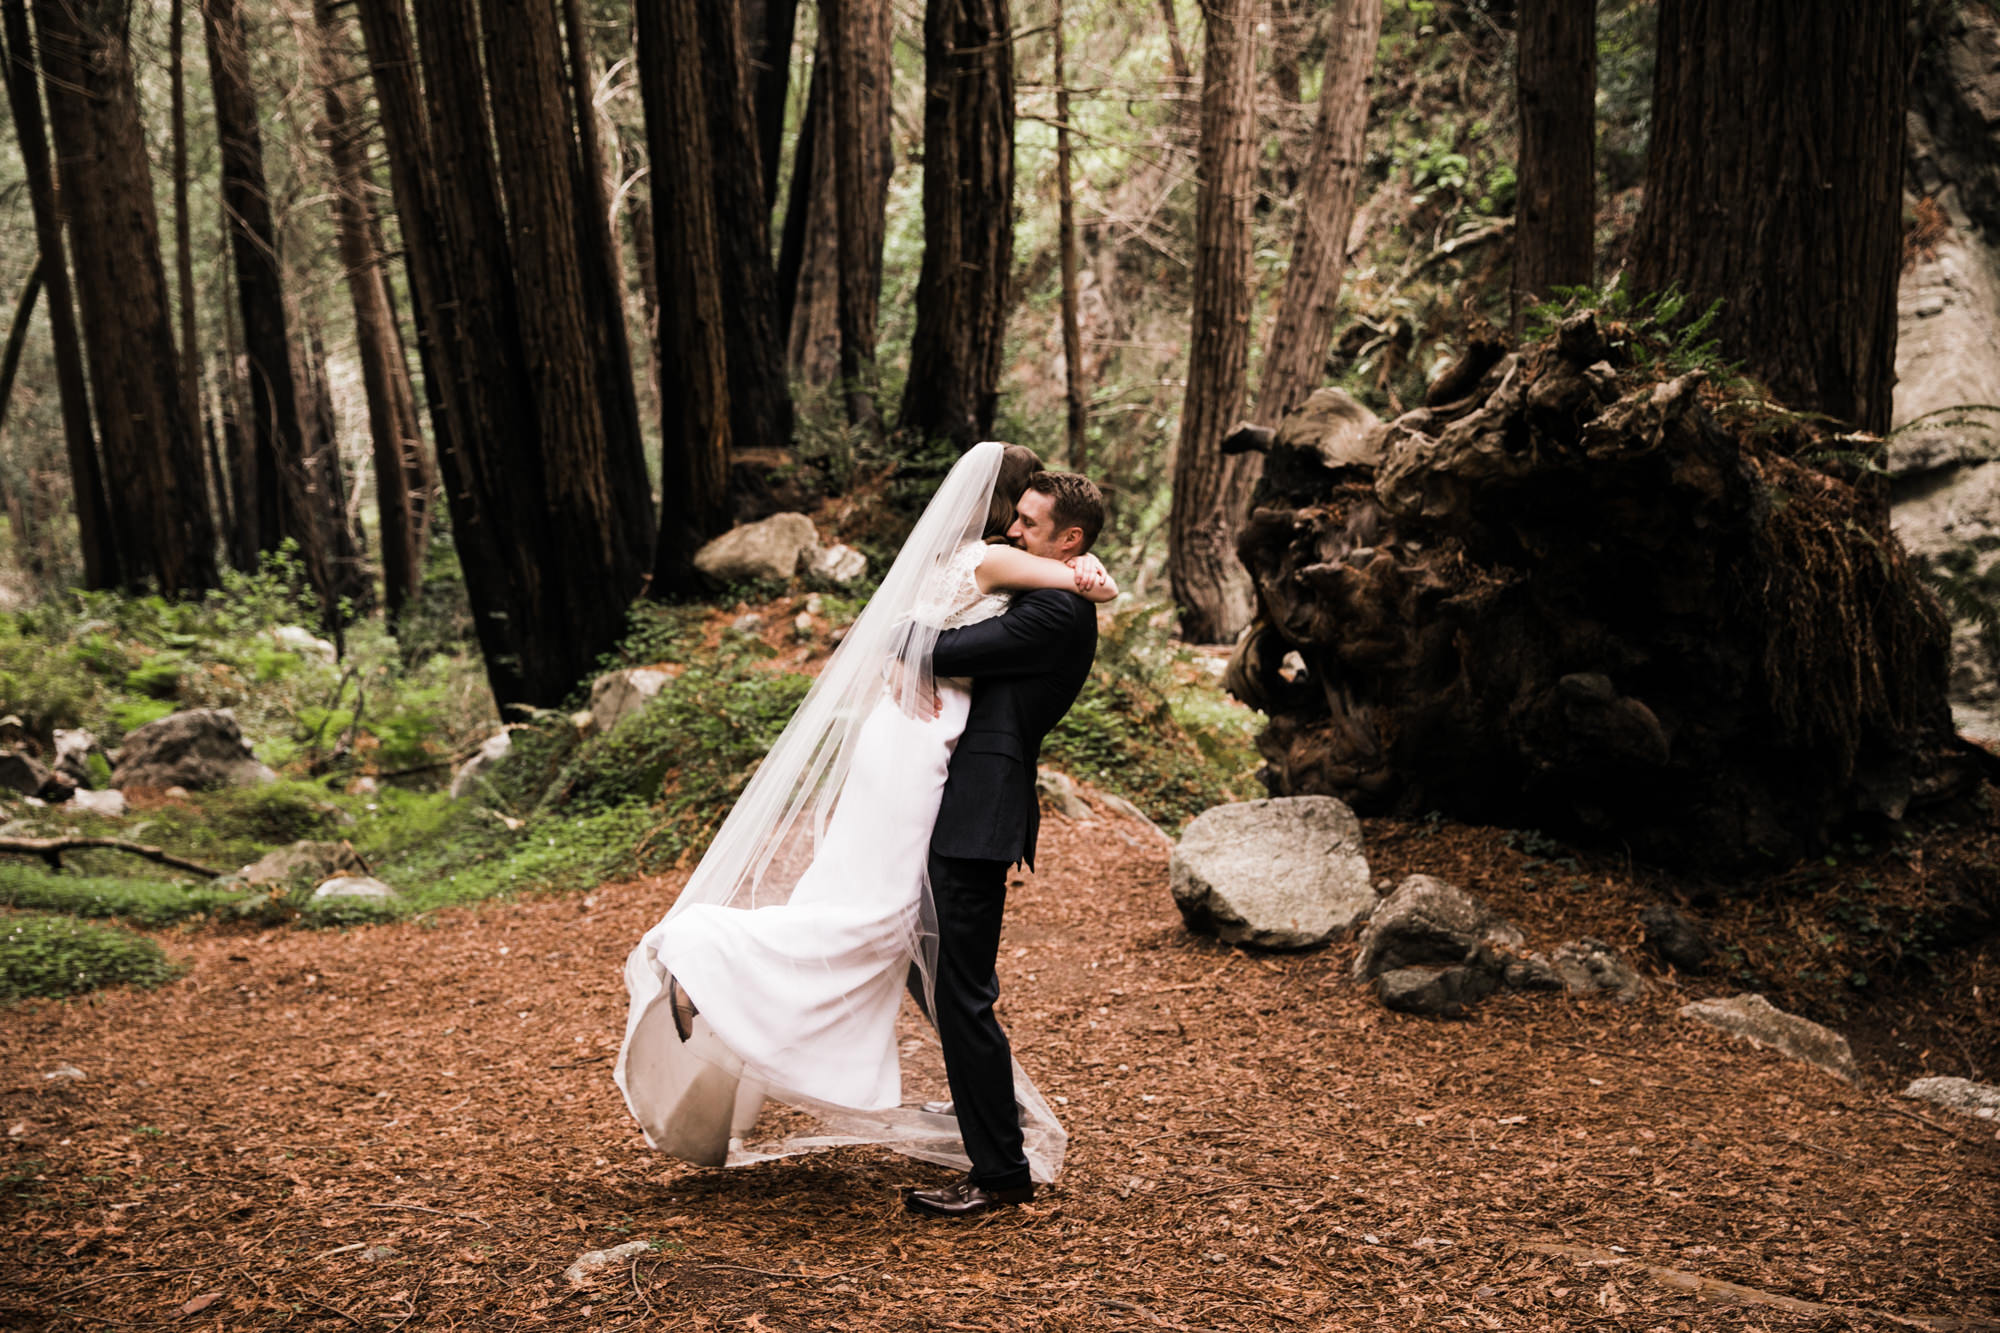 Spring elopement in Big Sur, California | The Hearnes Adventure Wedding Photography